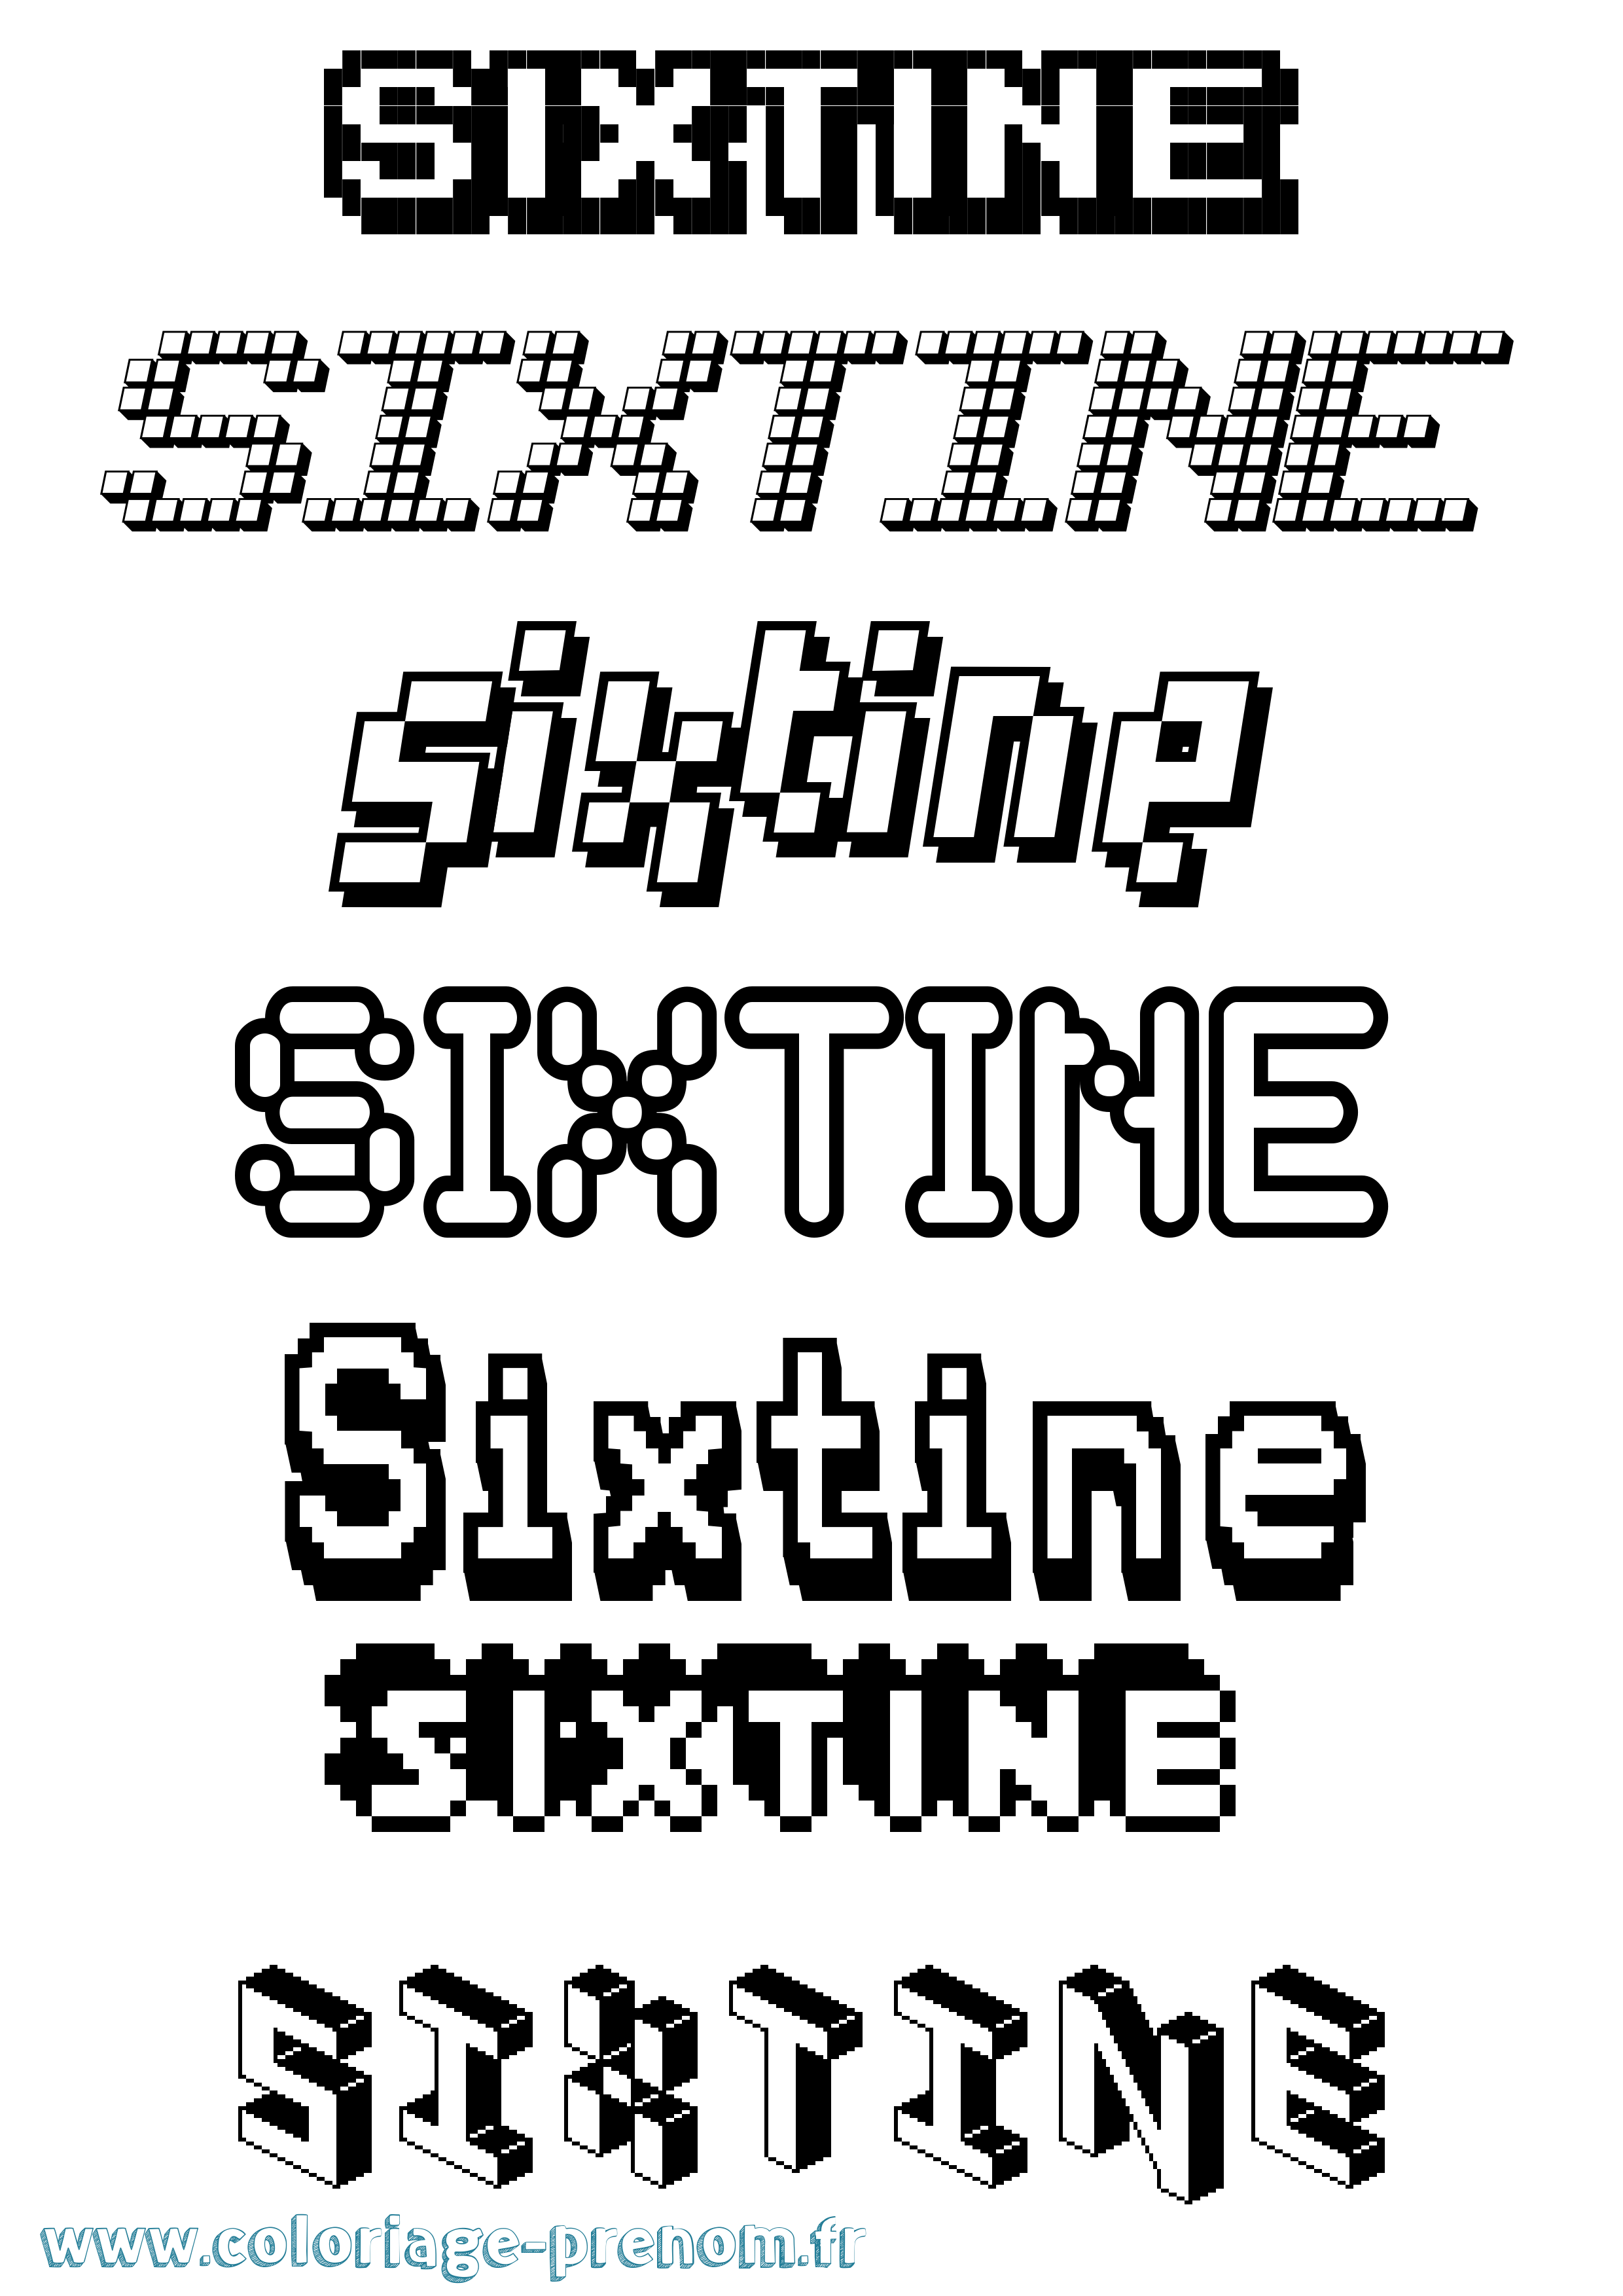 Coloriage prénom Sixtine